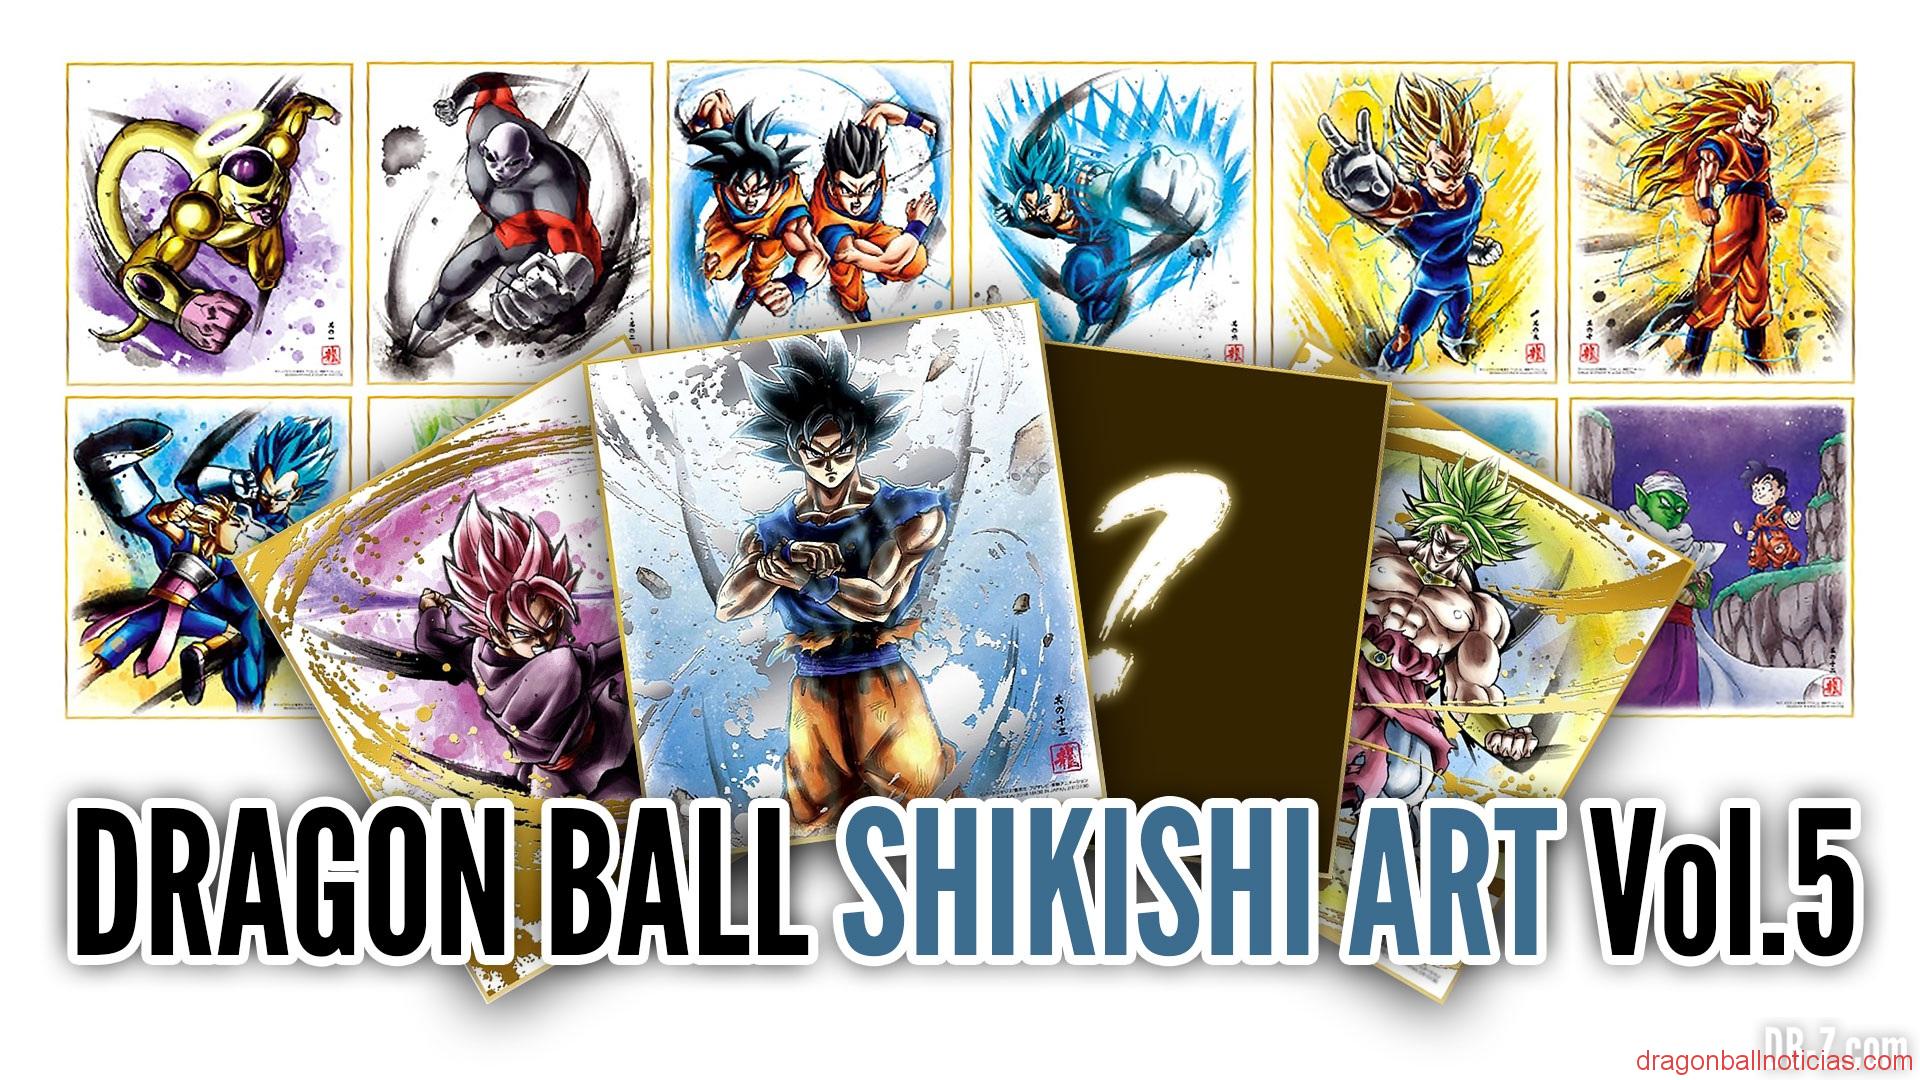 Shikishi Art Dragon Ball Vol 5 es anunciado